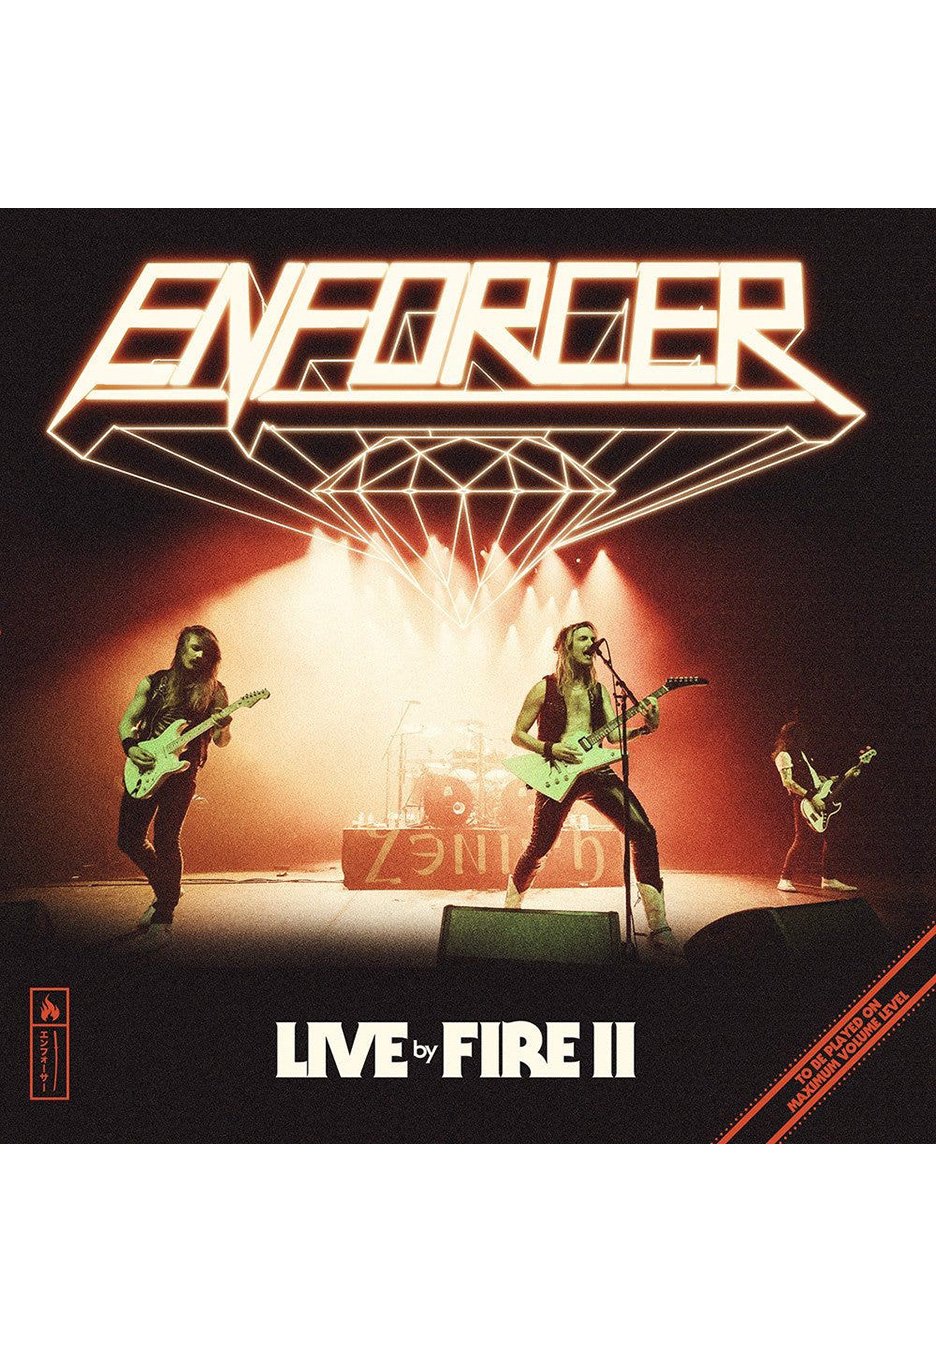 Enforcer - Live By Fire II Fluorescent Orange - Colored 2 Vinyl